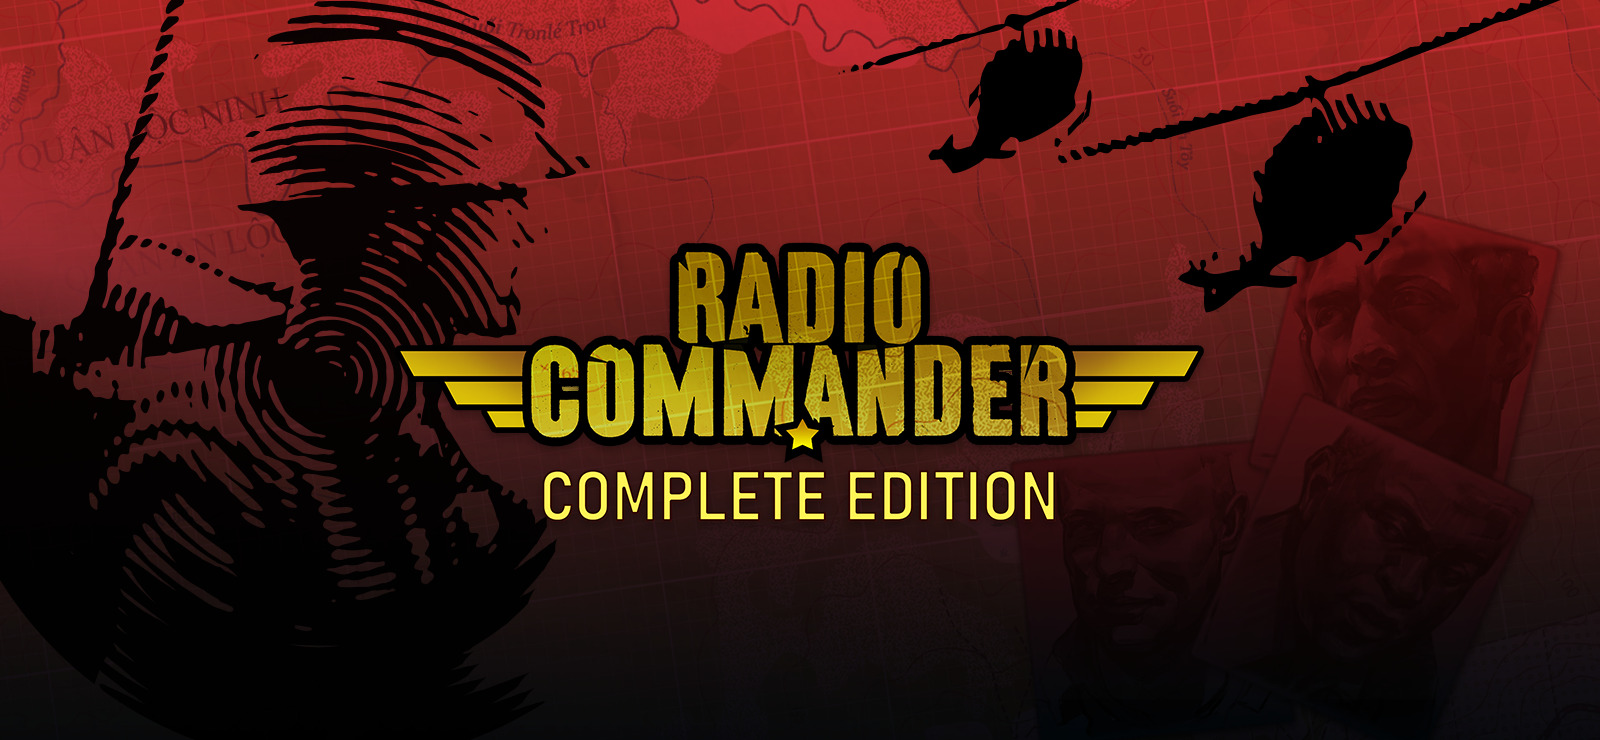 Command completed. Radio Commander. Radio Commander 2. Radio Commander похожие игры. Radio Commander прохождение.